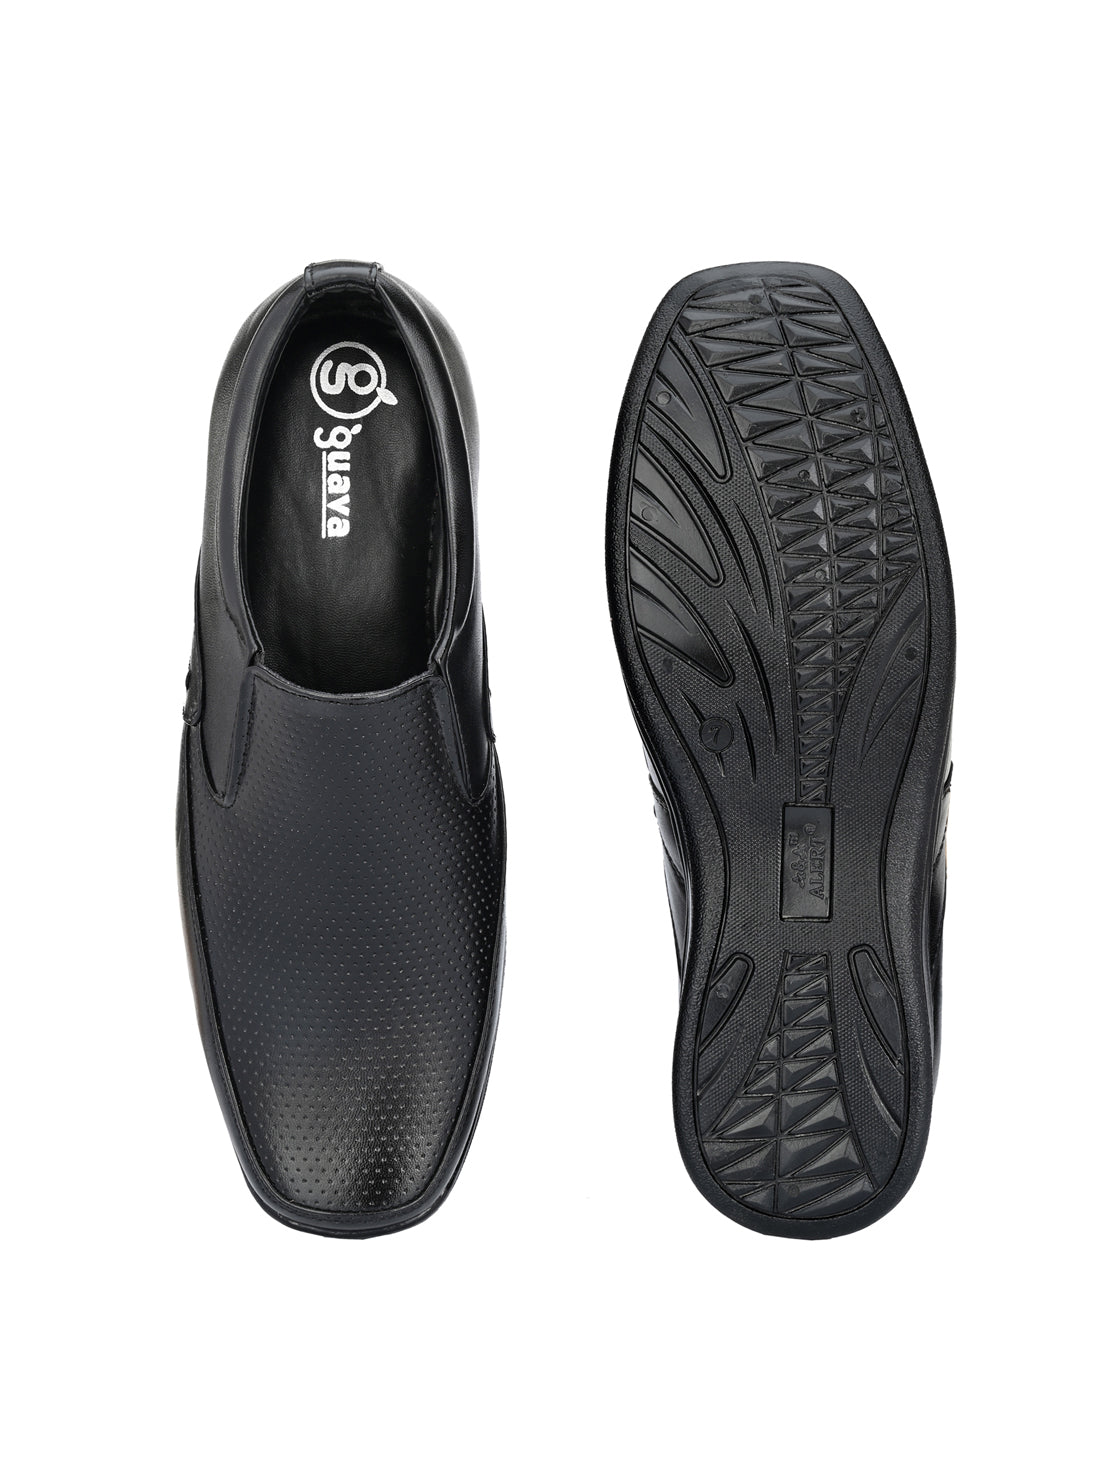 Guava Men's Black Slip On Formal Shoes (GV15JA738)